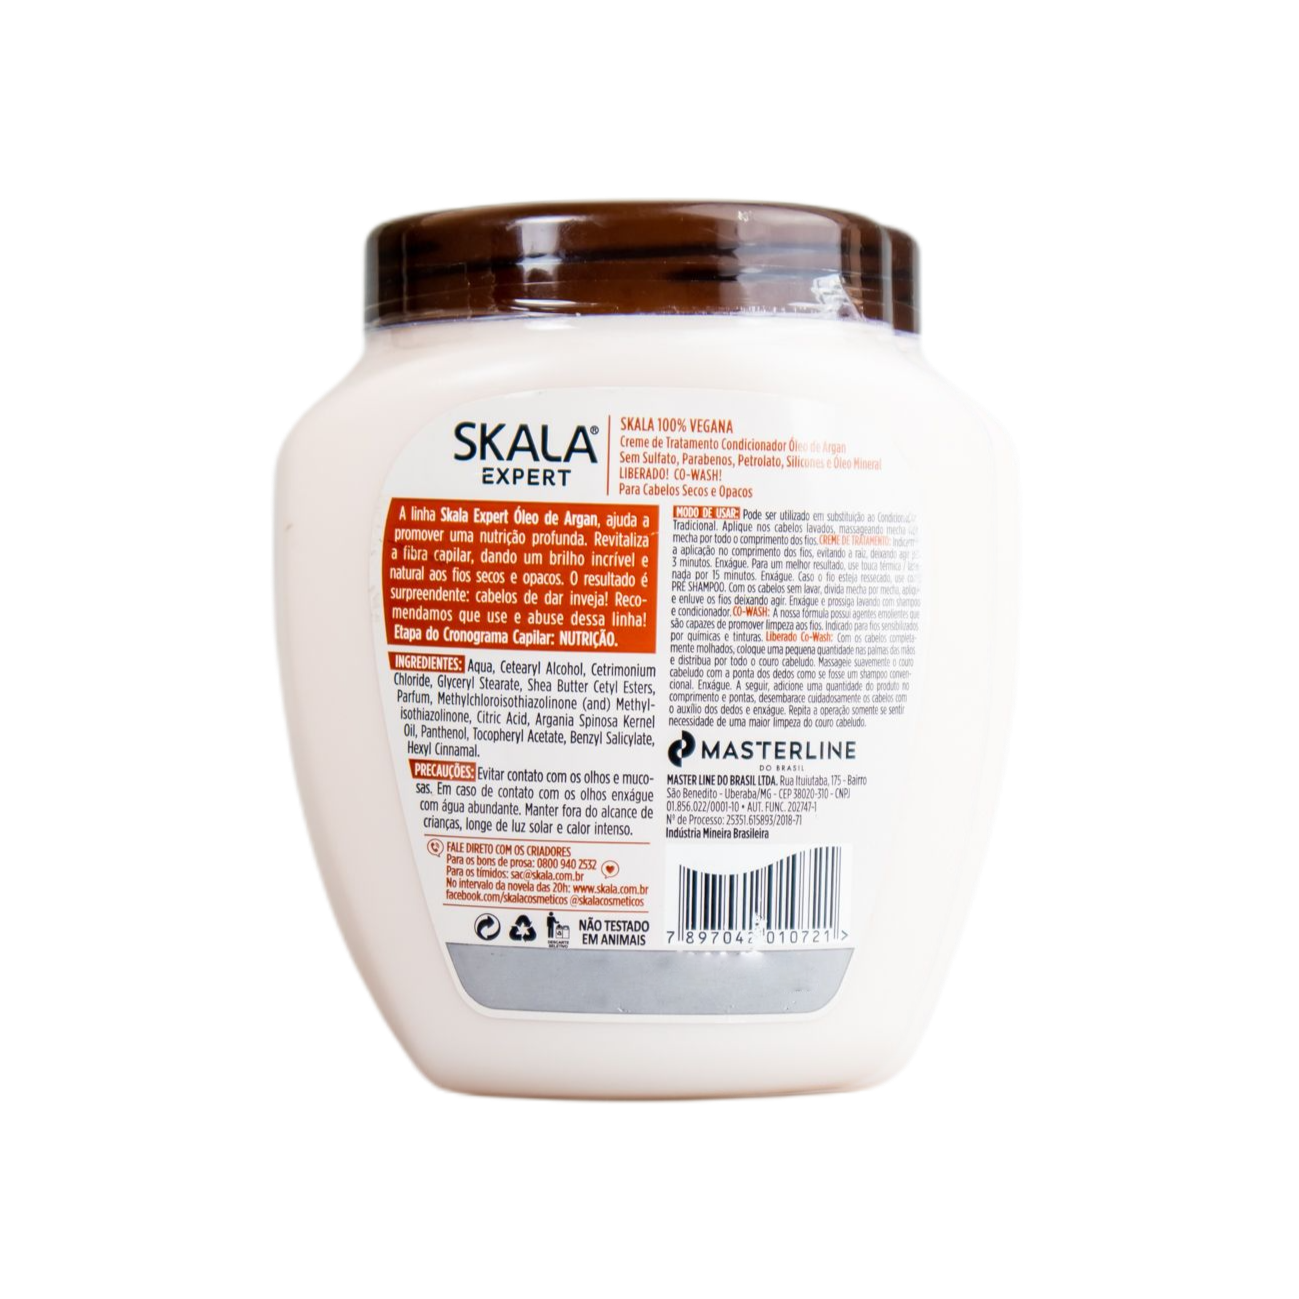 Skala Treatment Cream Creme De Tratamento Óleo De Argan / Cream Argan Oil Treatment Treatment Cream - Skala